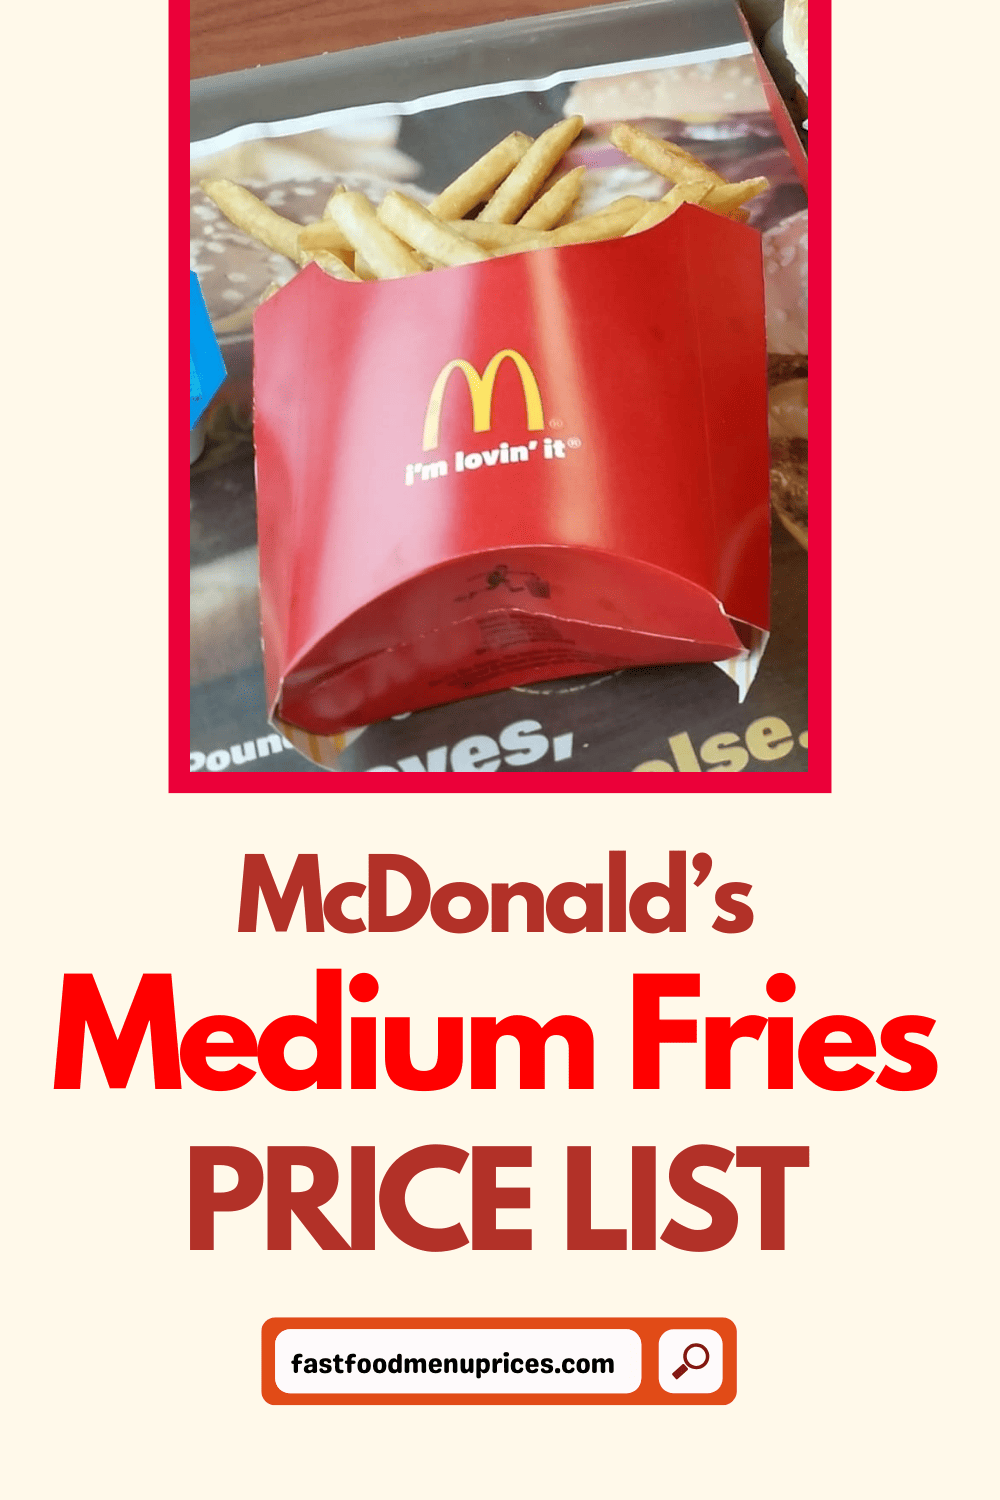 Mcdonald's medium fries secret menu.